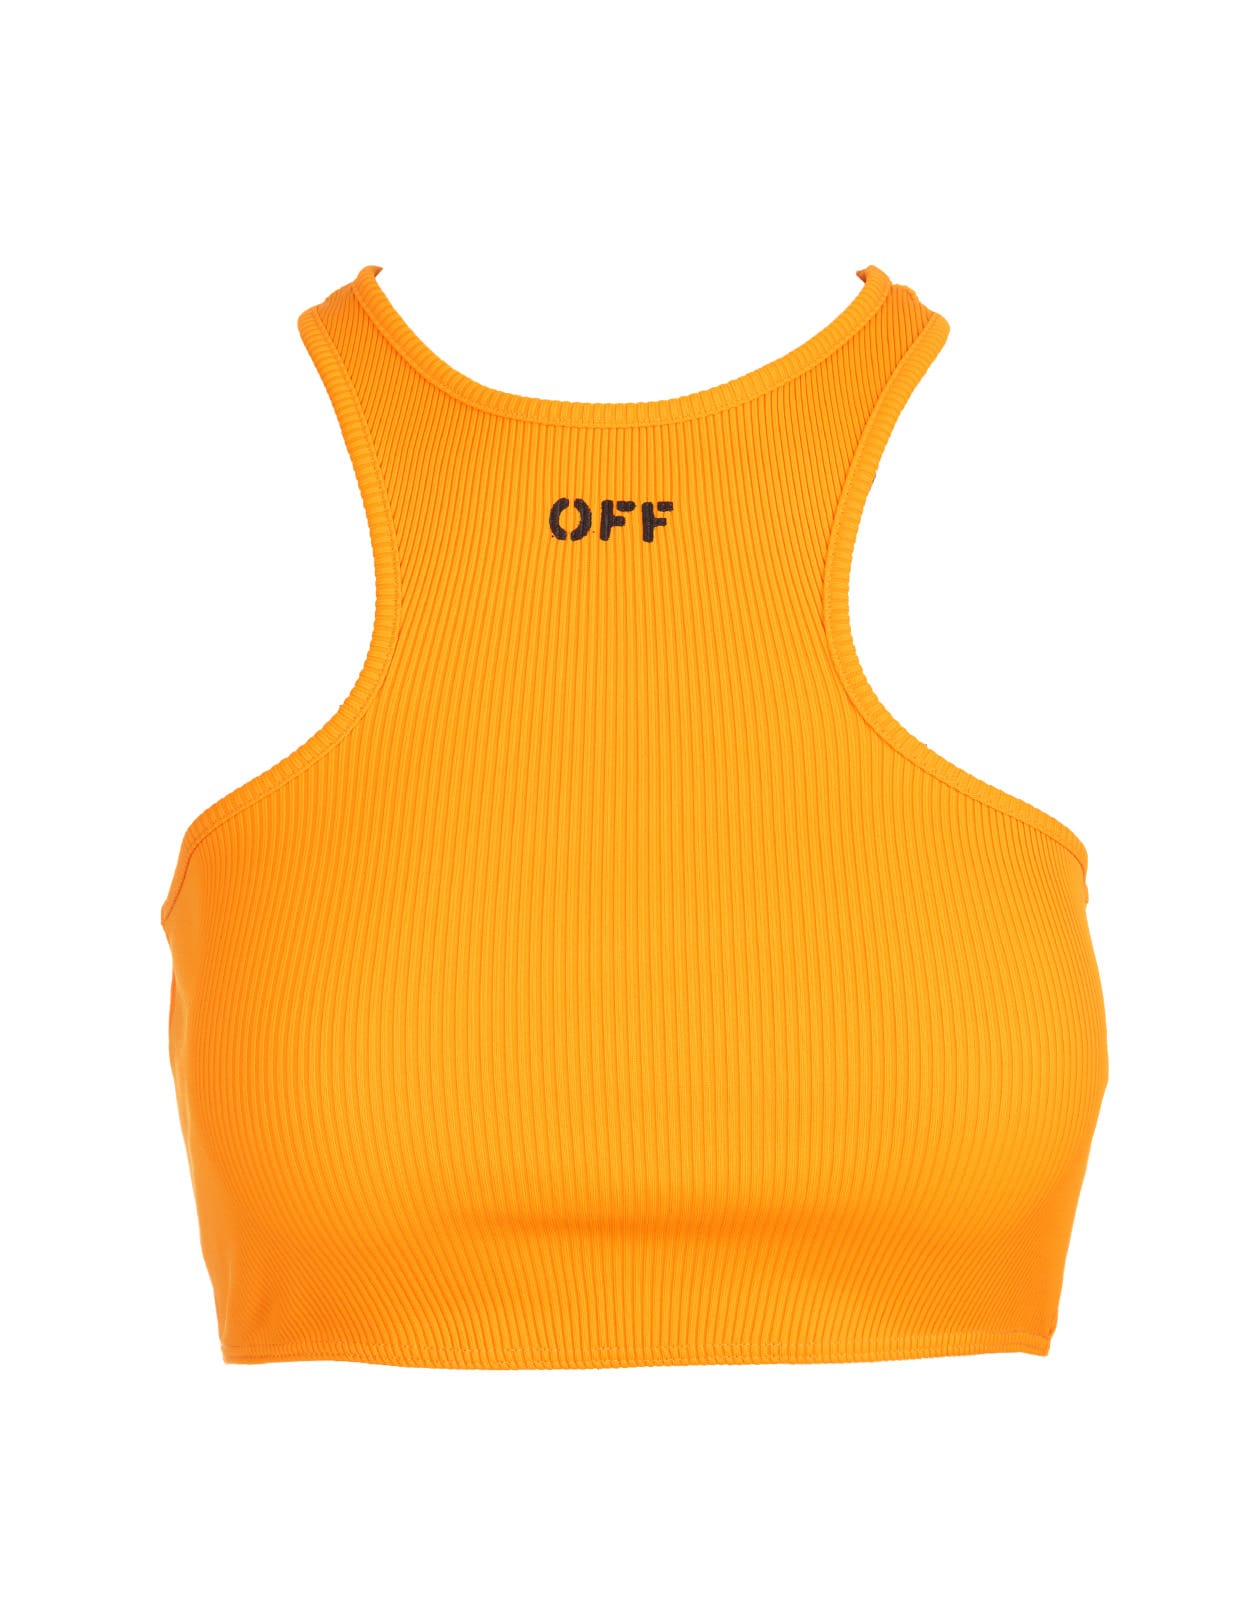 Off-White Orange Basic Rowing Top